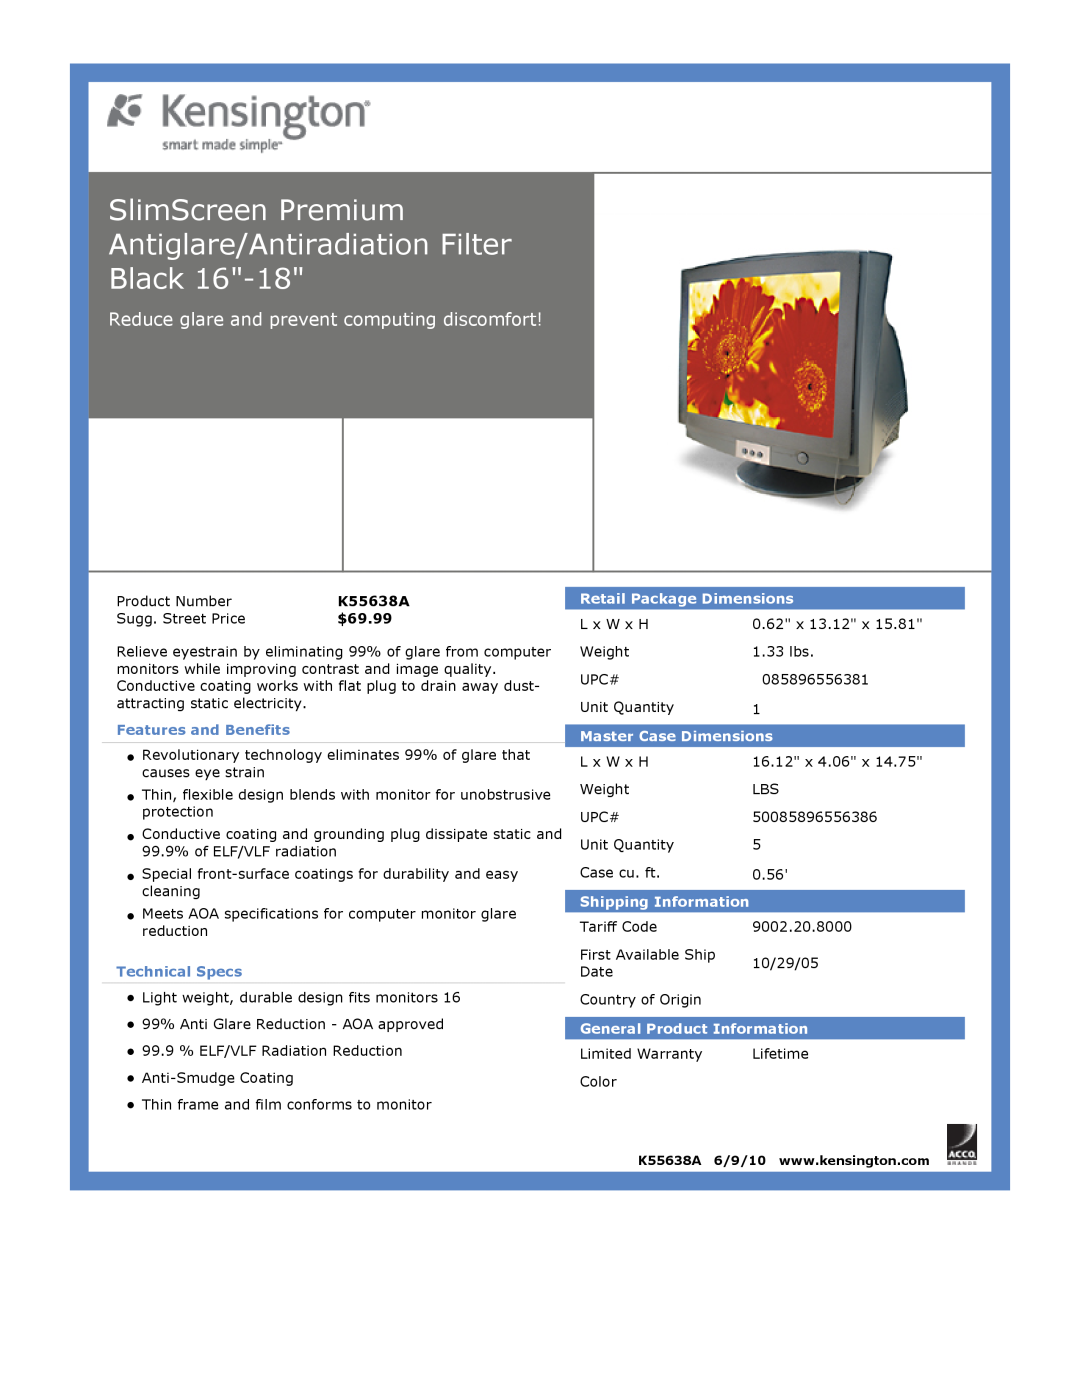 Kensington EU64325 SlimScreen Premium Antiglare/Antiradiation Filter, Black, Reduce glare and prevent computing discomfort 